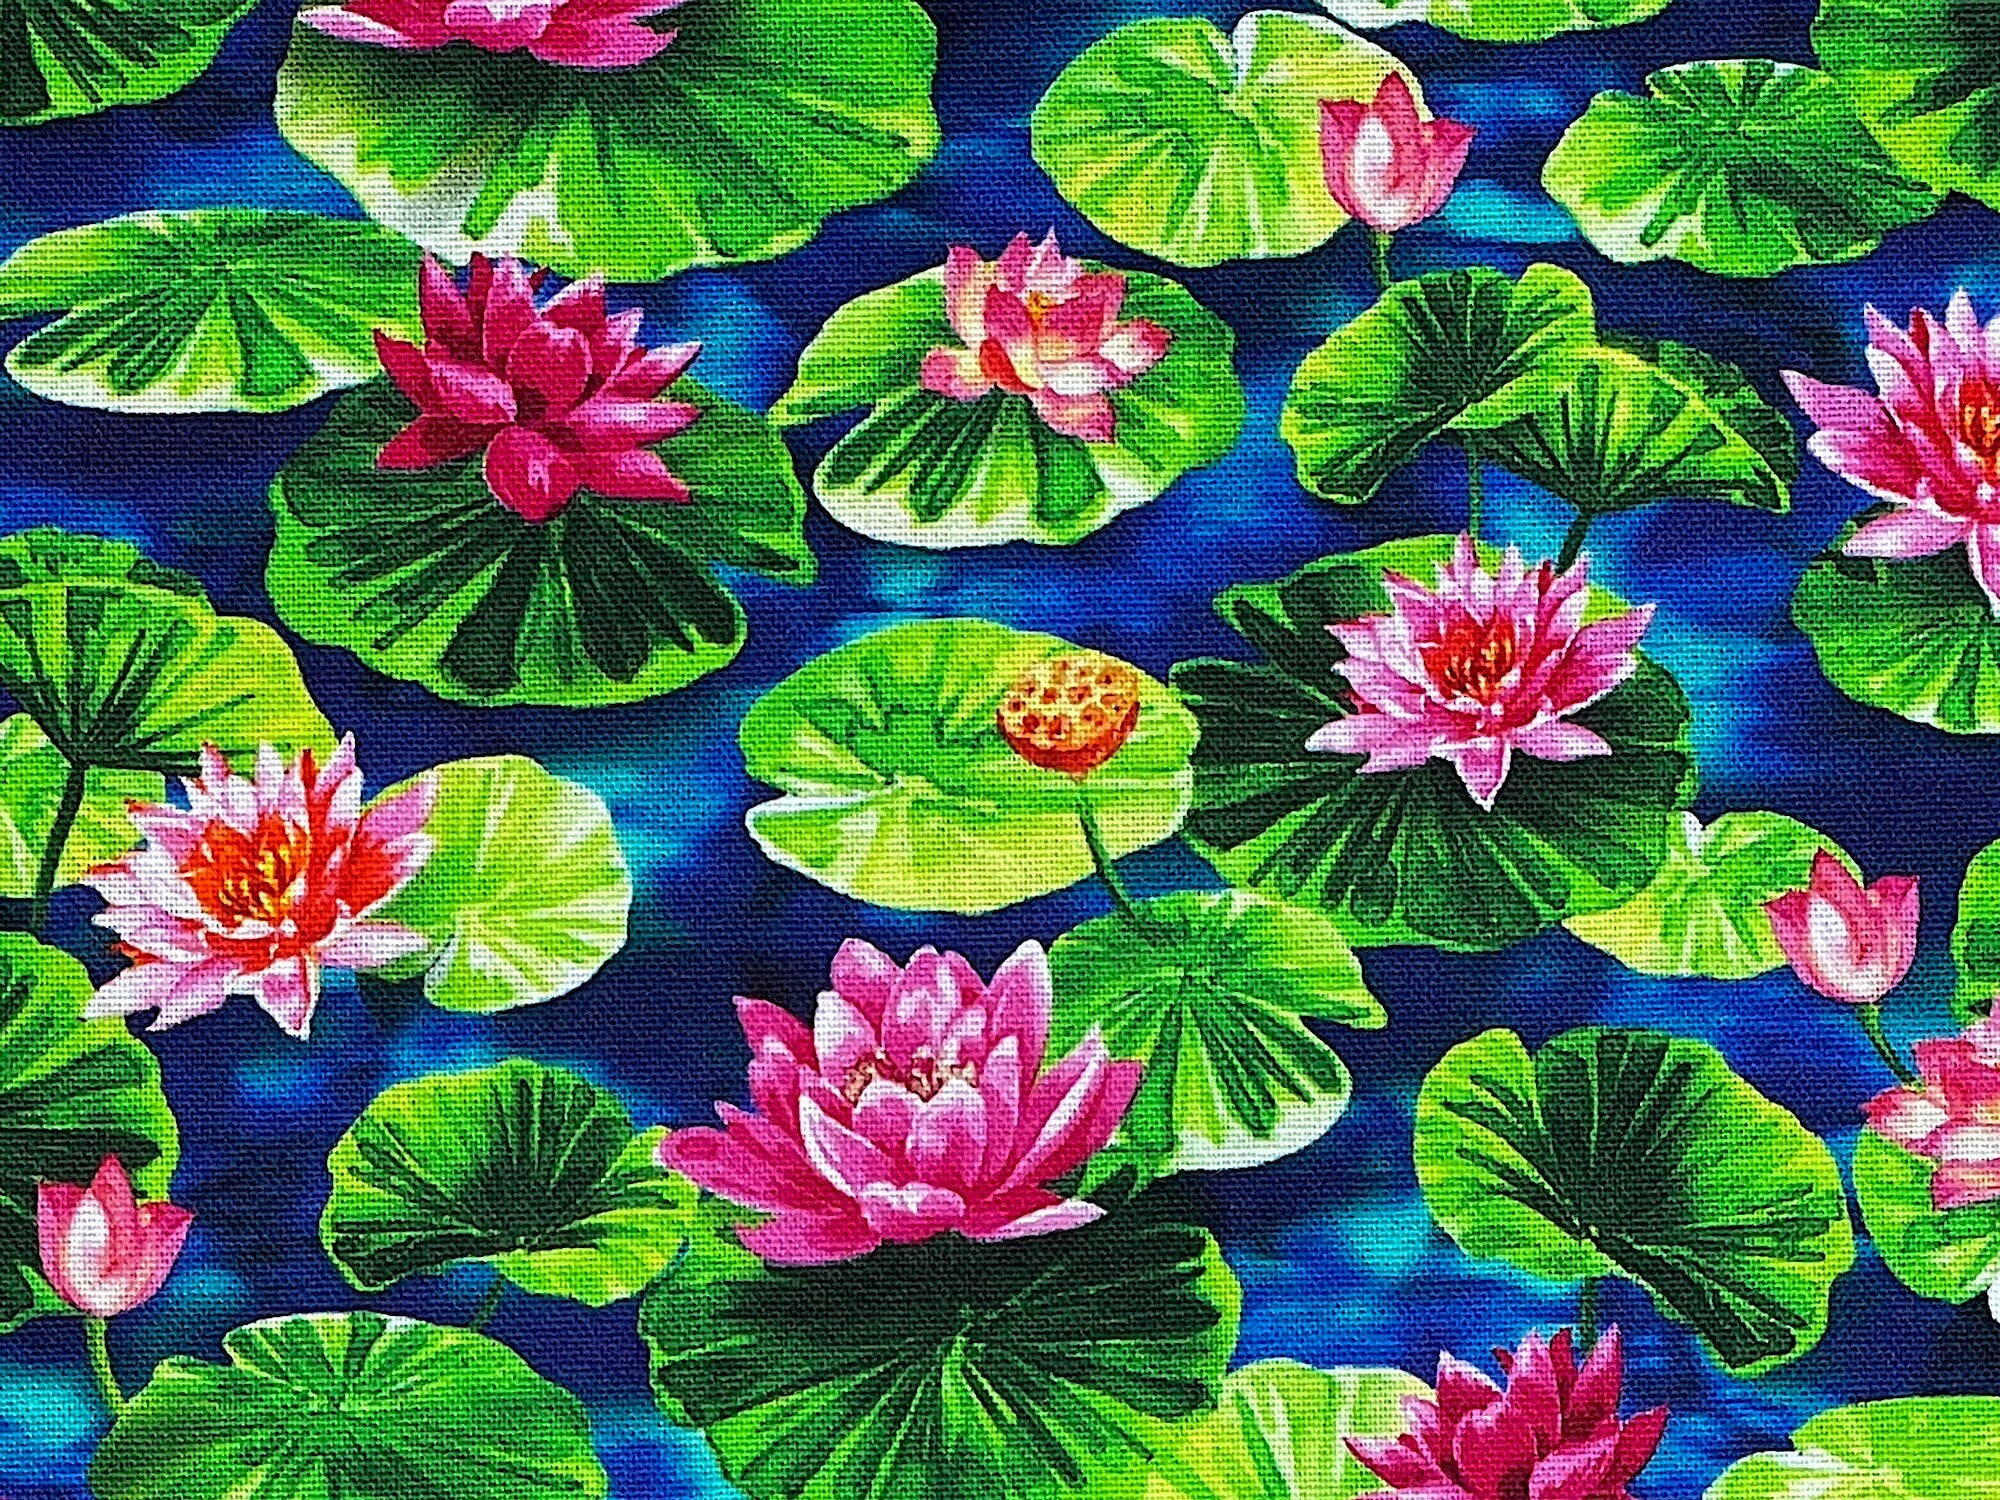 Koi Pond - Blue Water Lotus - Fish Fabric - Cotton Fabric - Quilting Fabric - Michael Miller - FISH-41